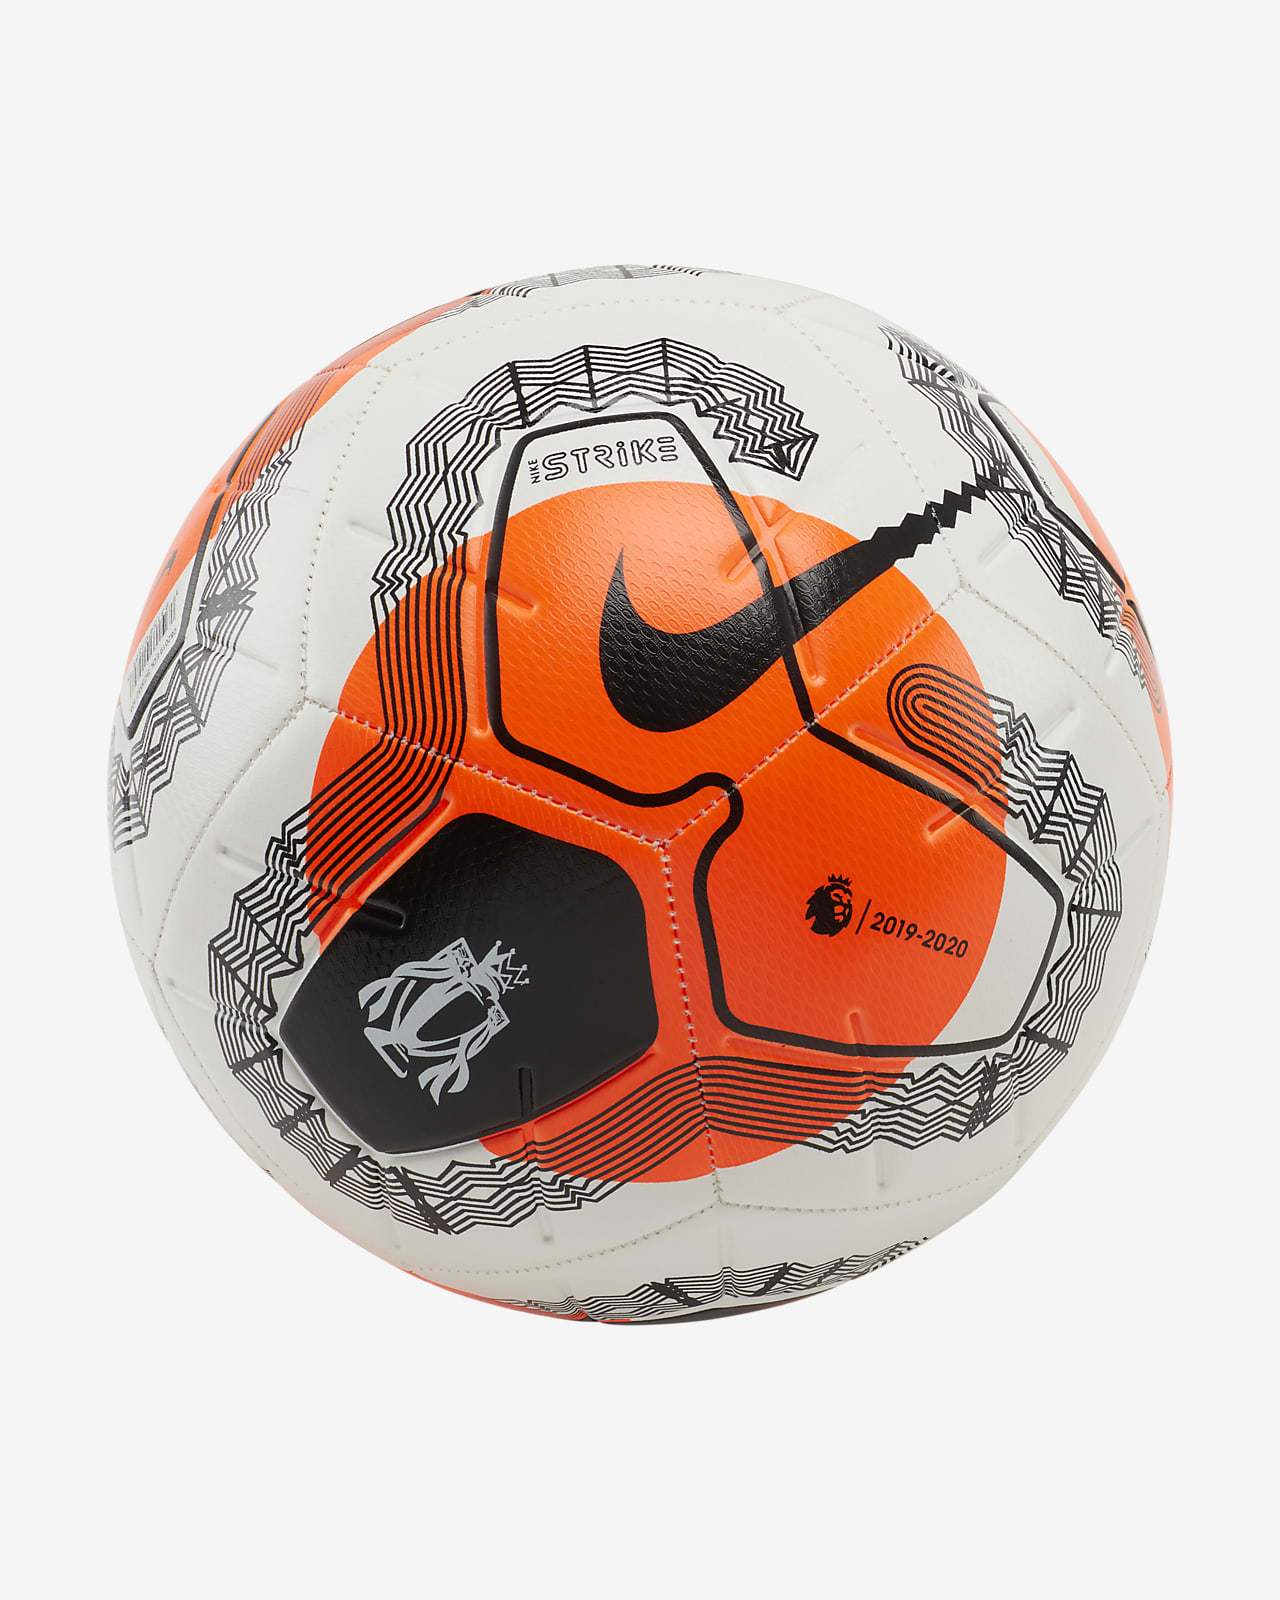 Balón de fútbol Premier League Strike. Nike.com